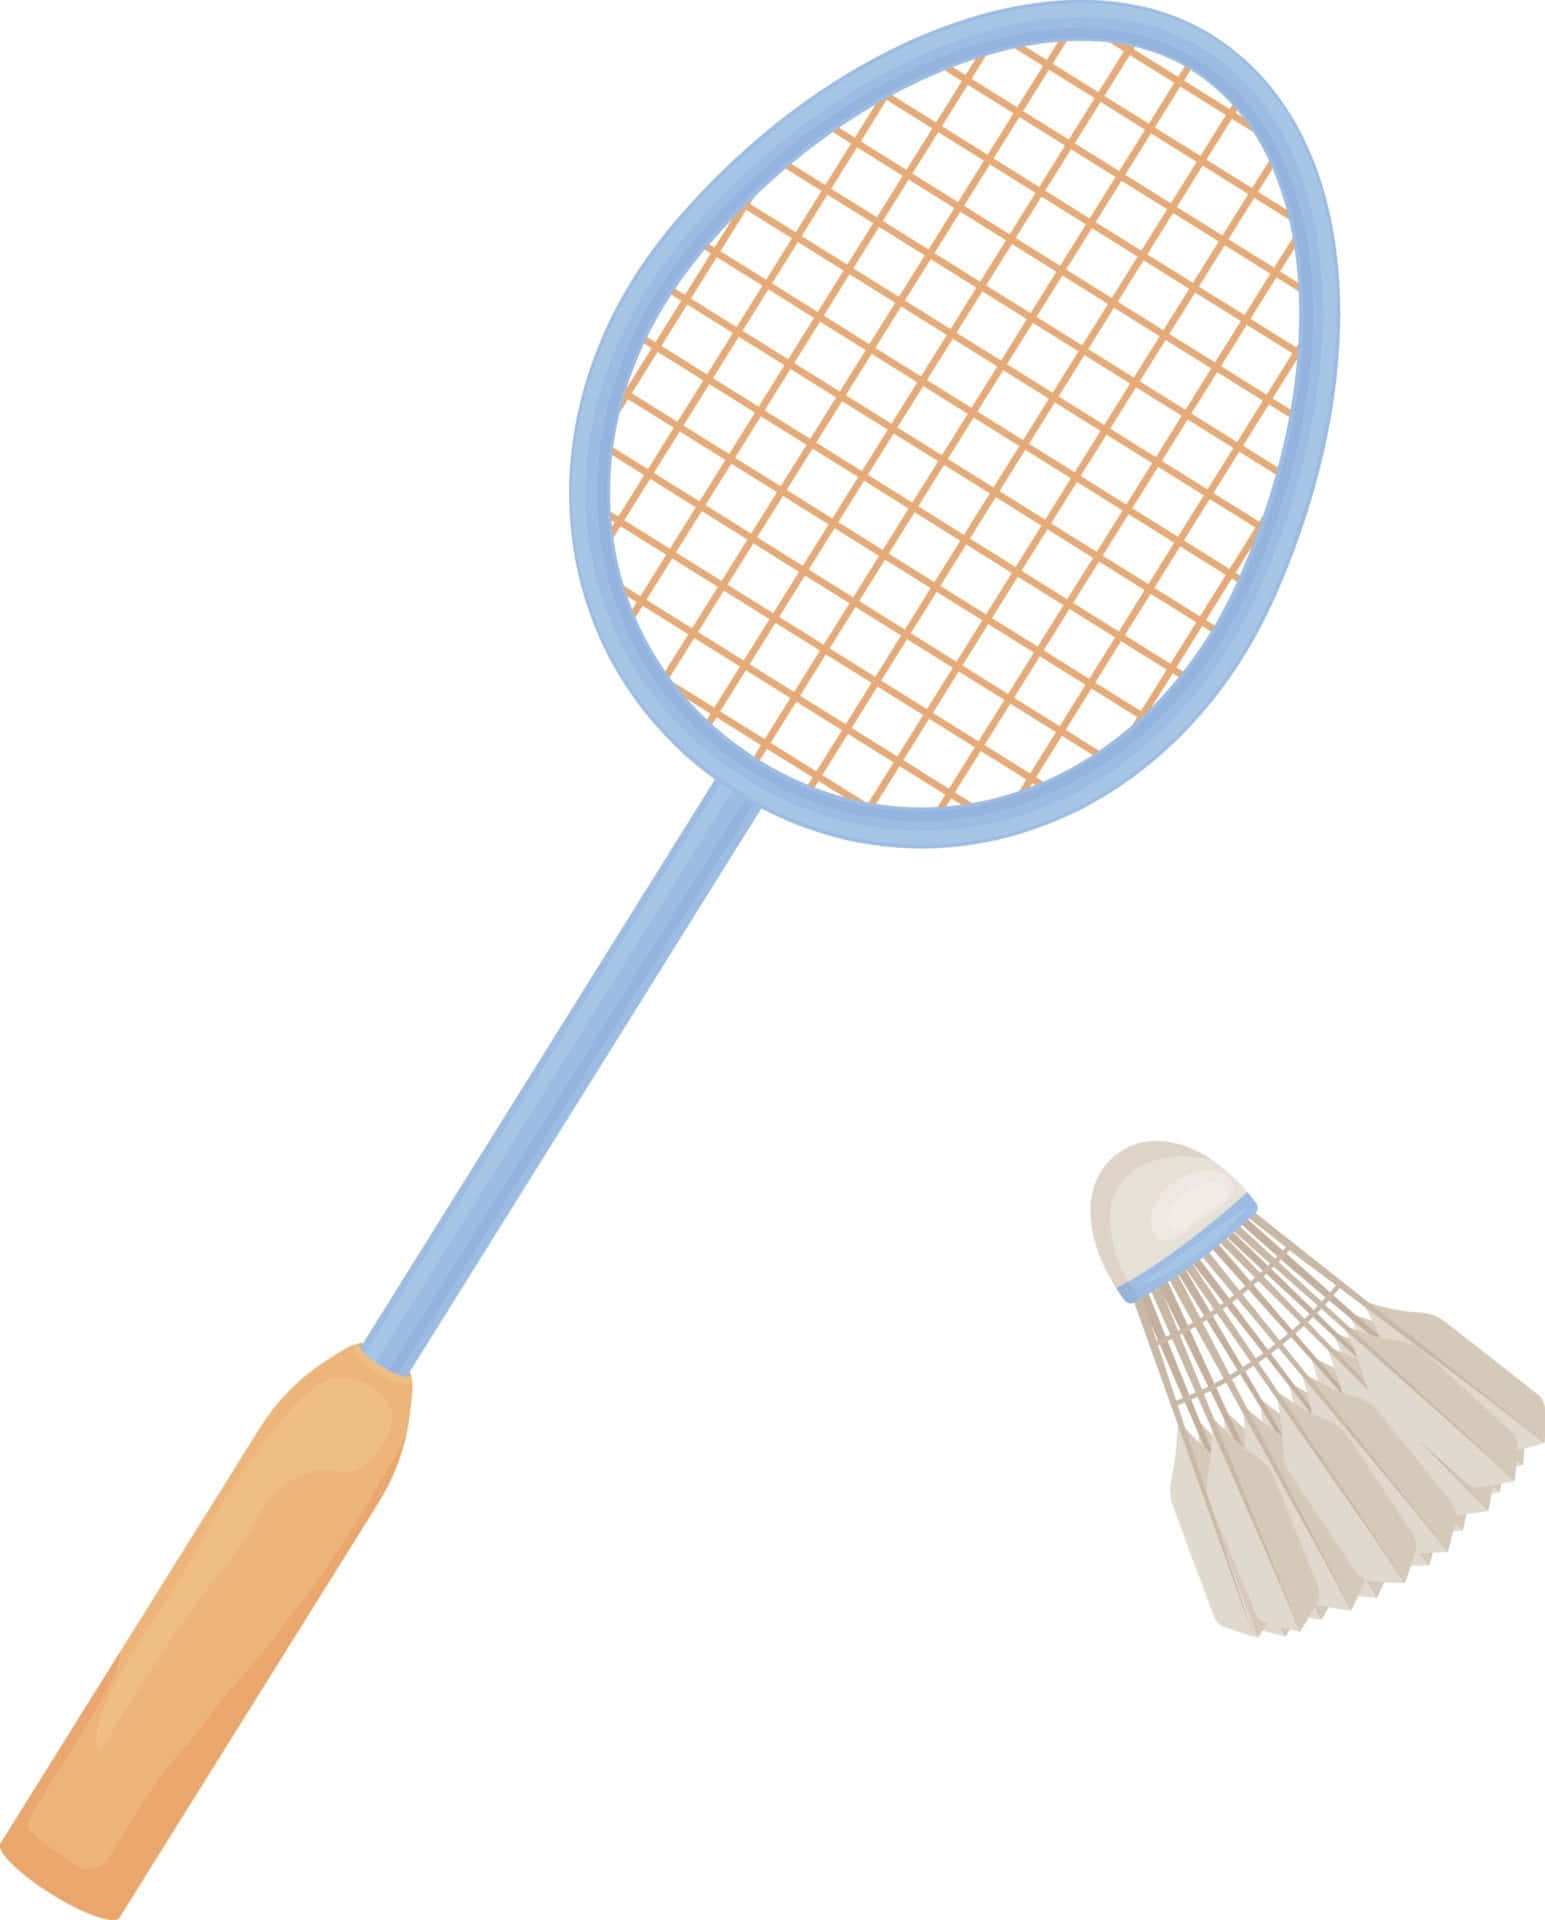 Badminton Bakgrund.